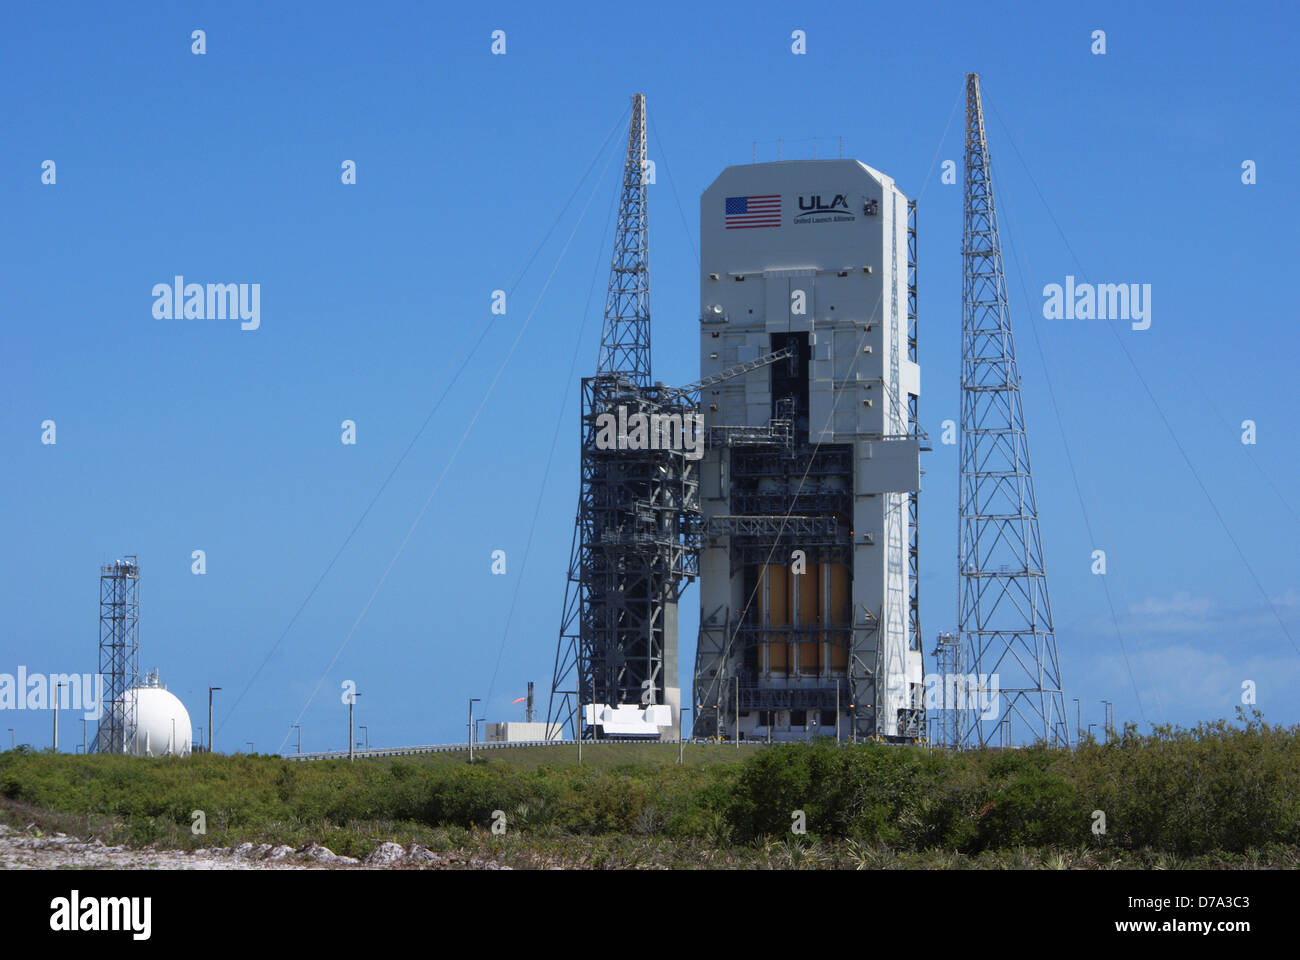 USA Florida Cape Canaveral Air Force Station Delta IV launch pad rocket interno mobile torre di servizio Foto Stock